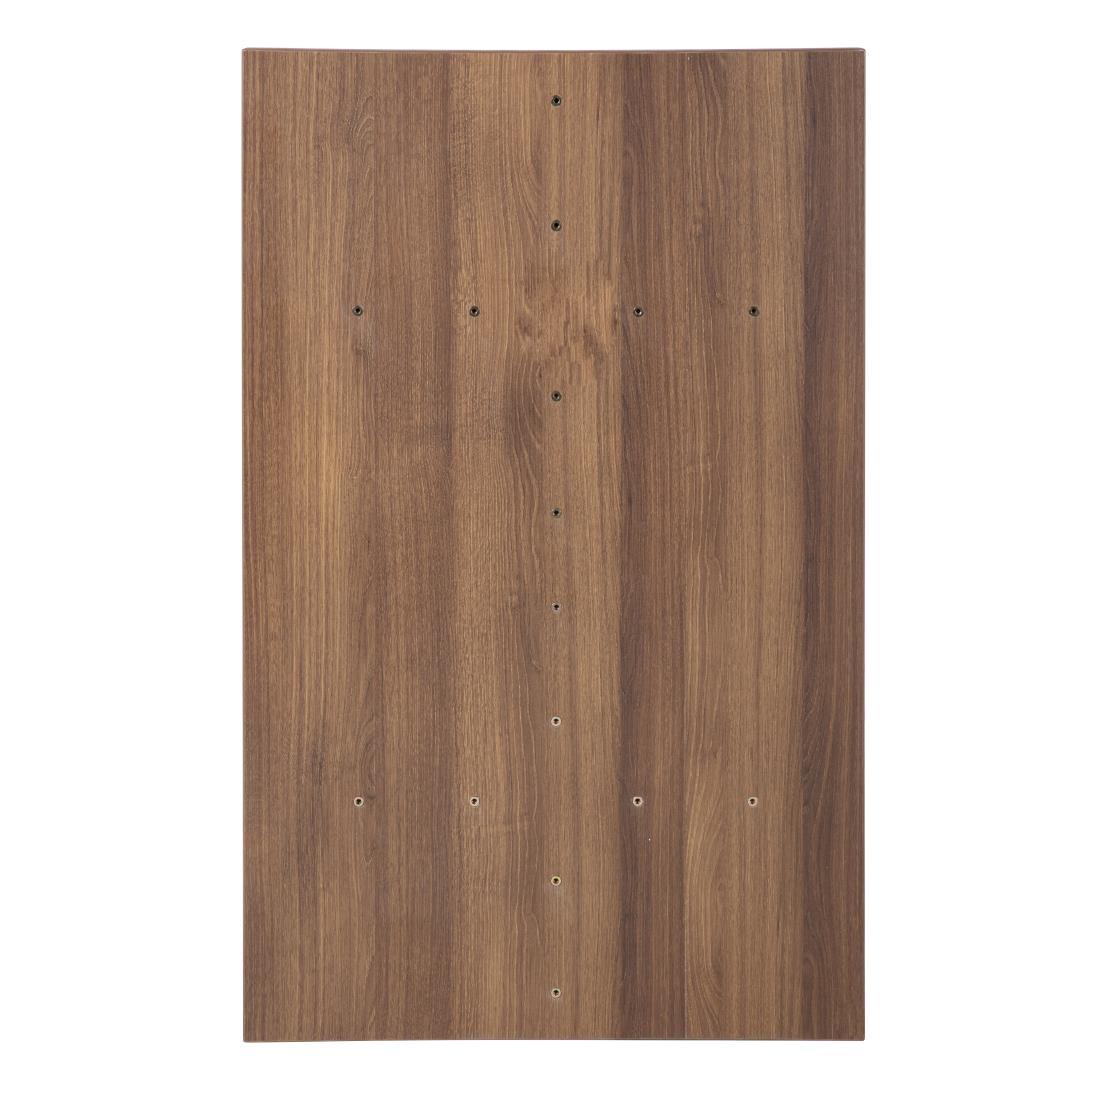 Bolero Pre-drilled Rectangular Table Top Rustic Oak 1100(W) x 700(D)mm - DT442  - 4